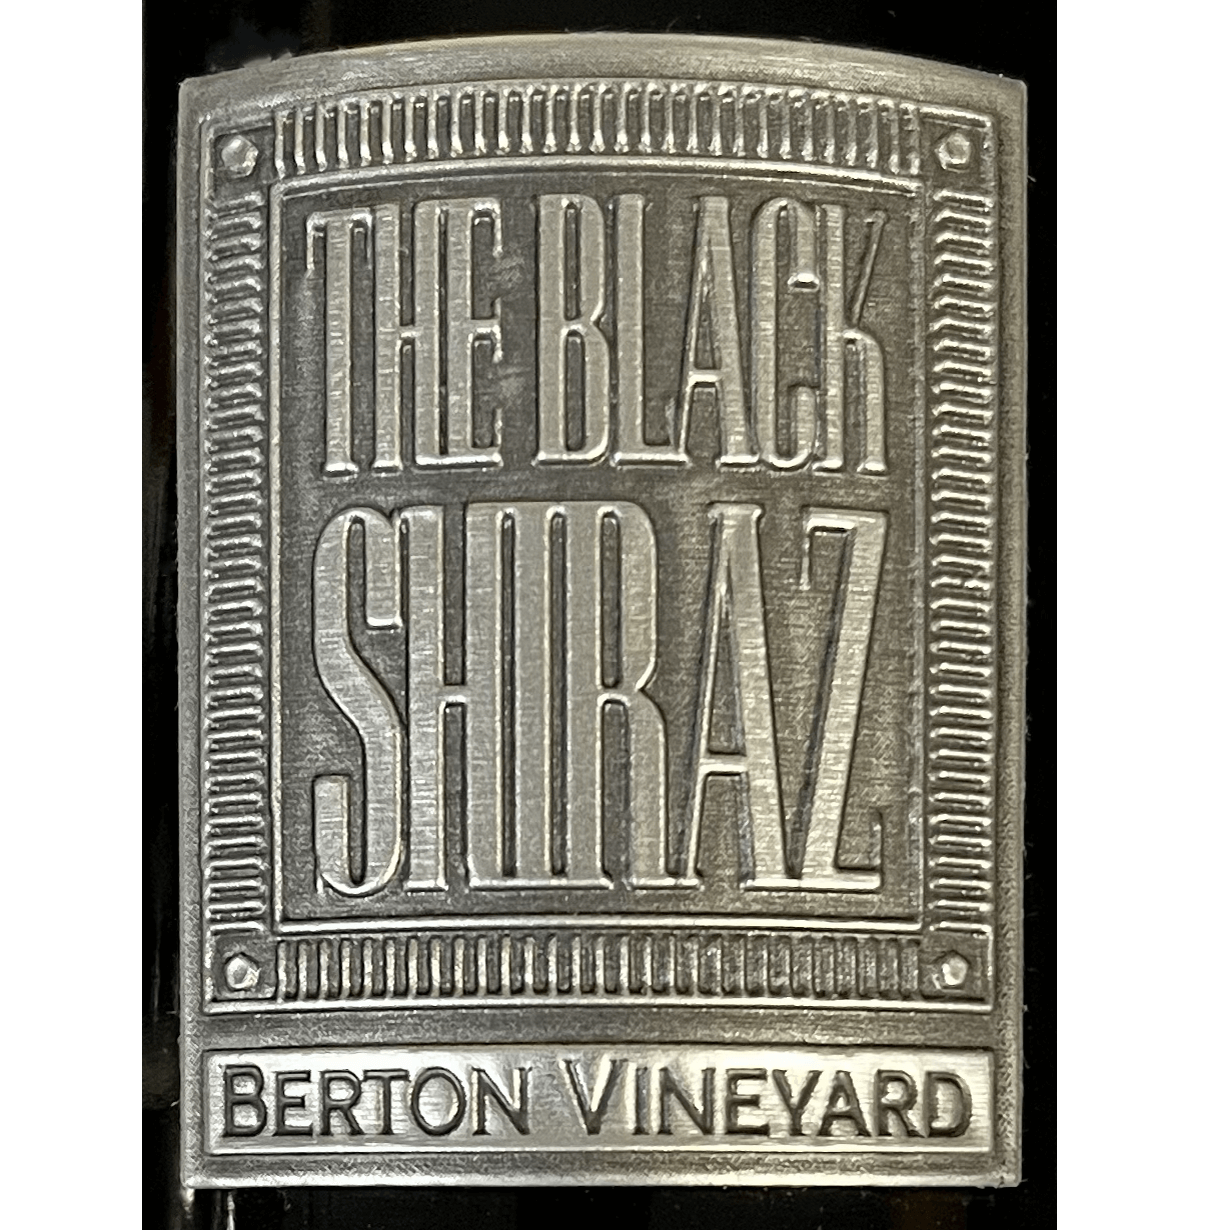 #093 - 2019 The Black Shiraz Berton Vineyard